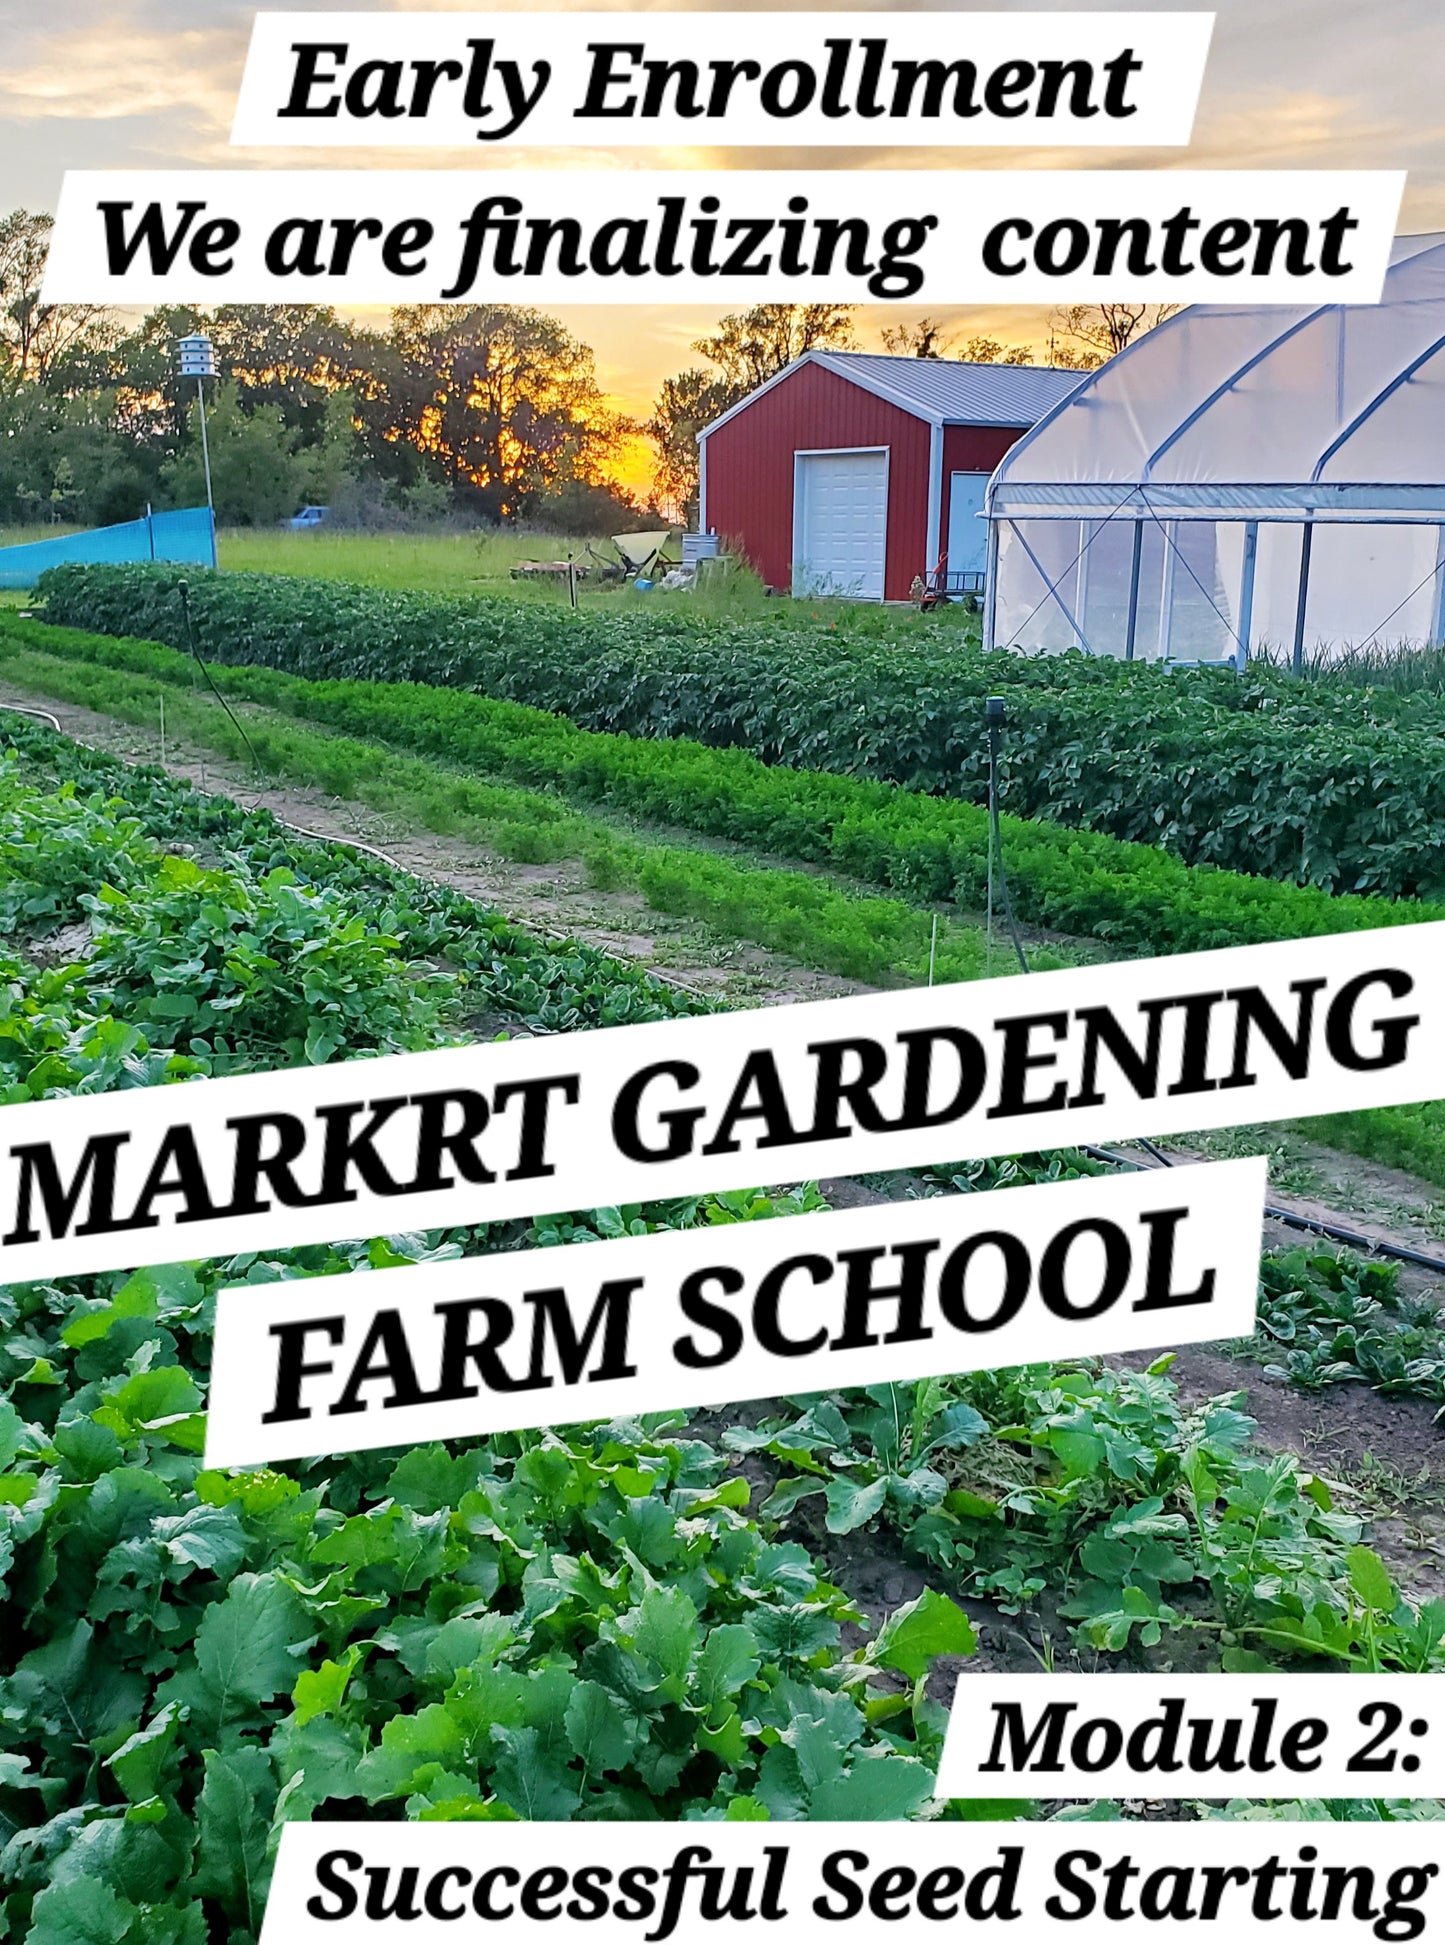 Market Gardening Farm School